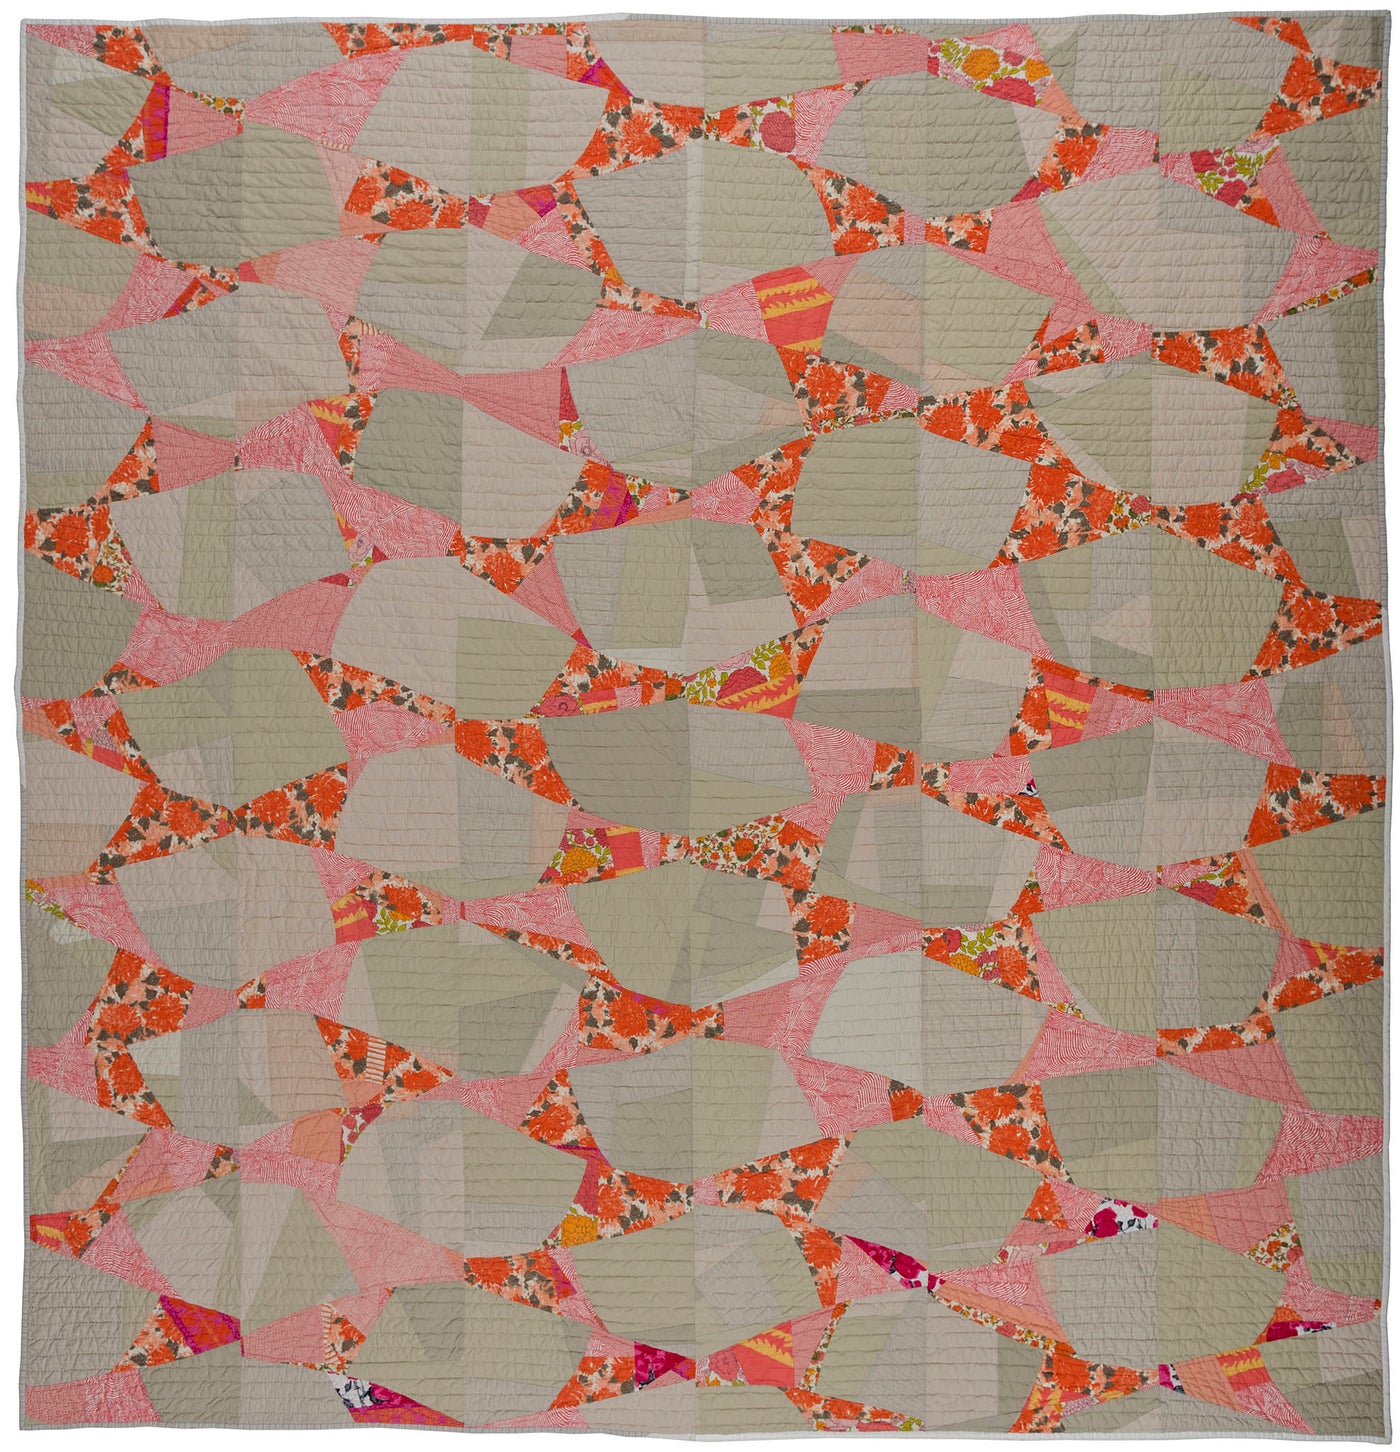 Pretty, a quilt by Sarah Nishiura